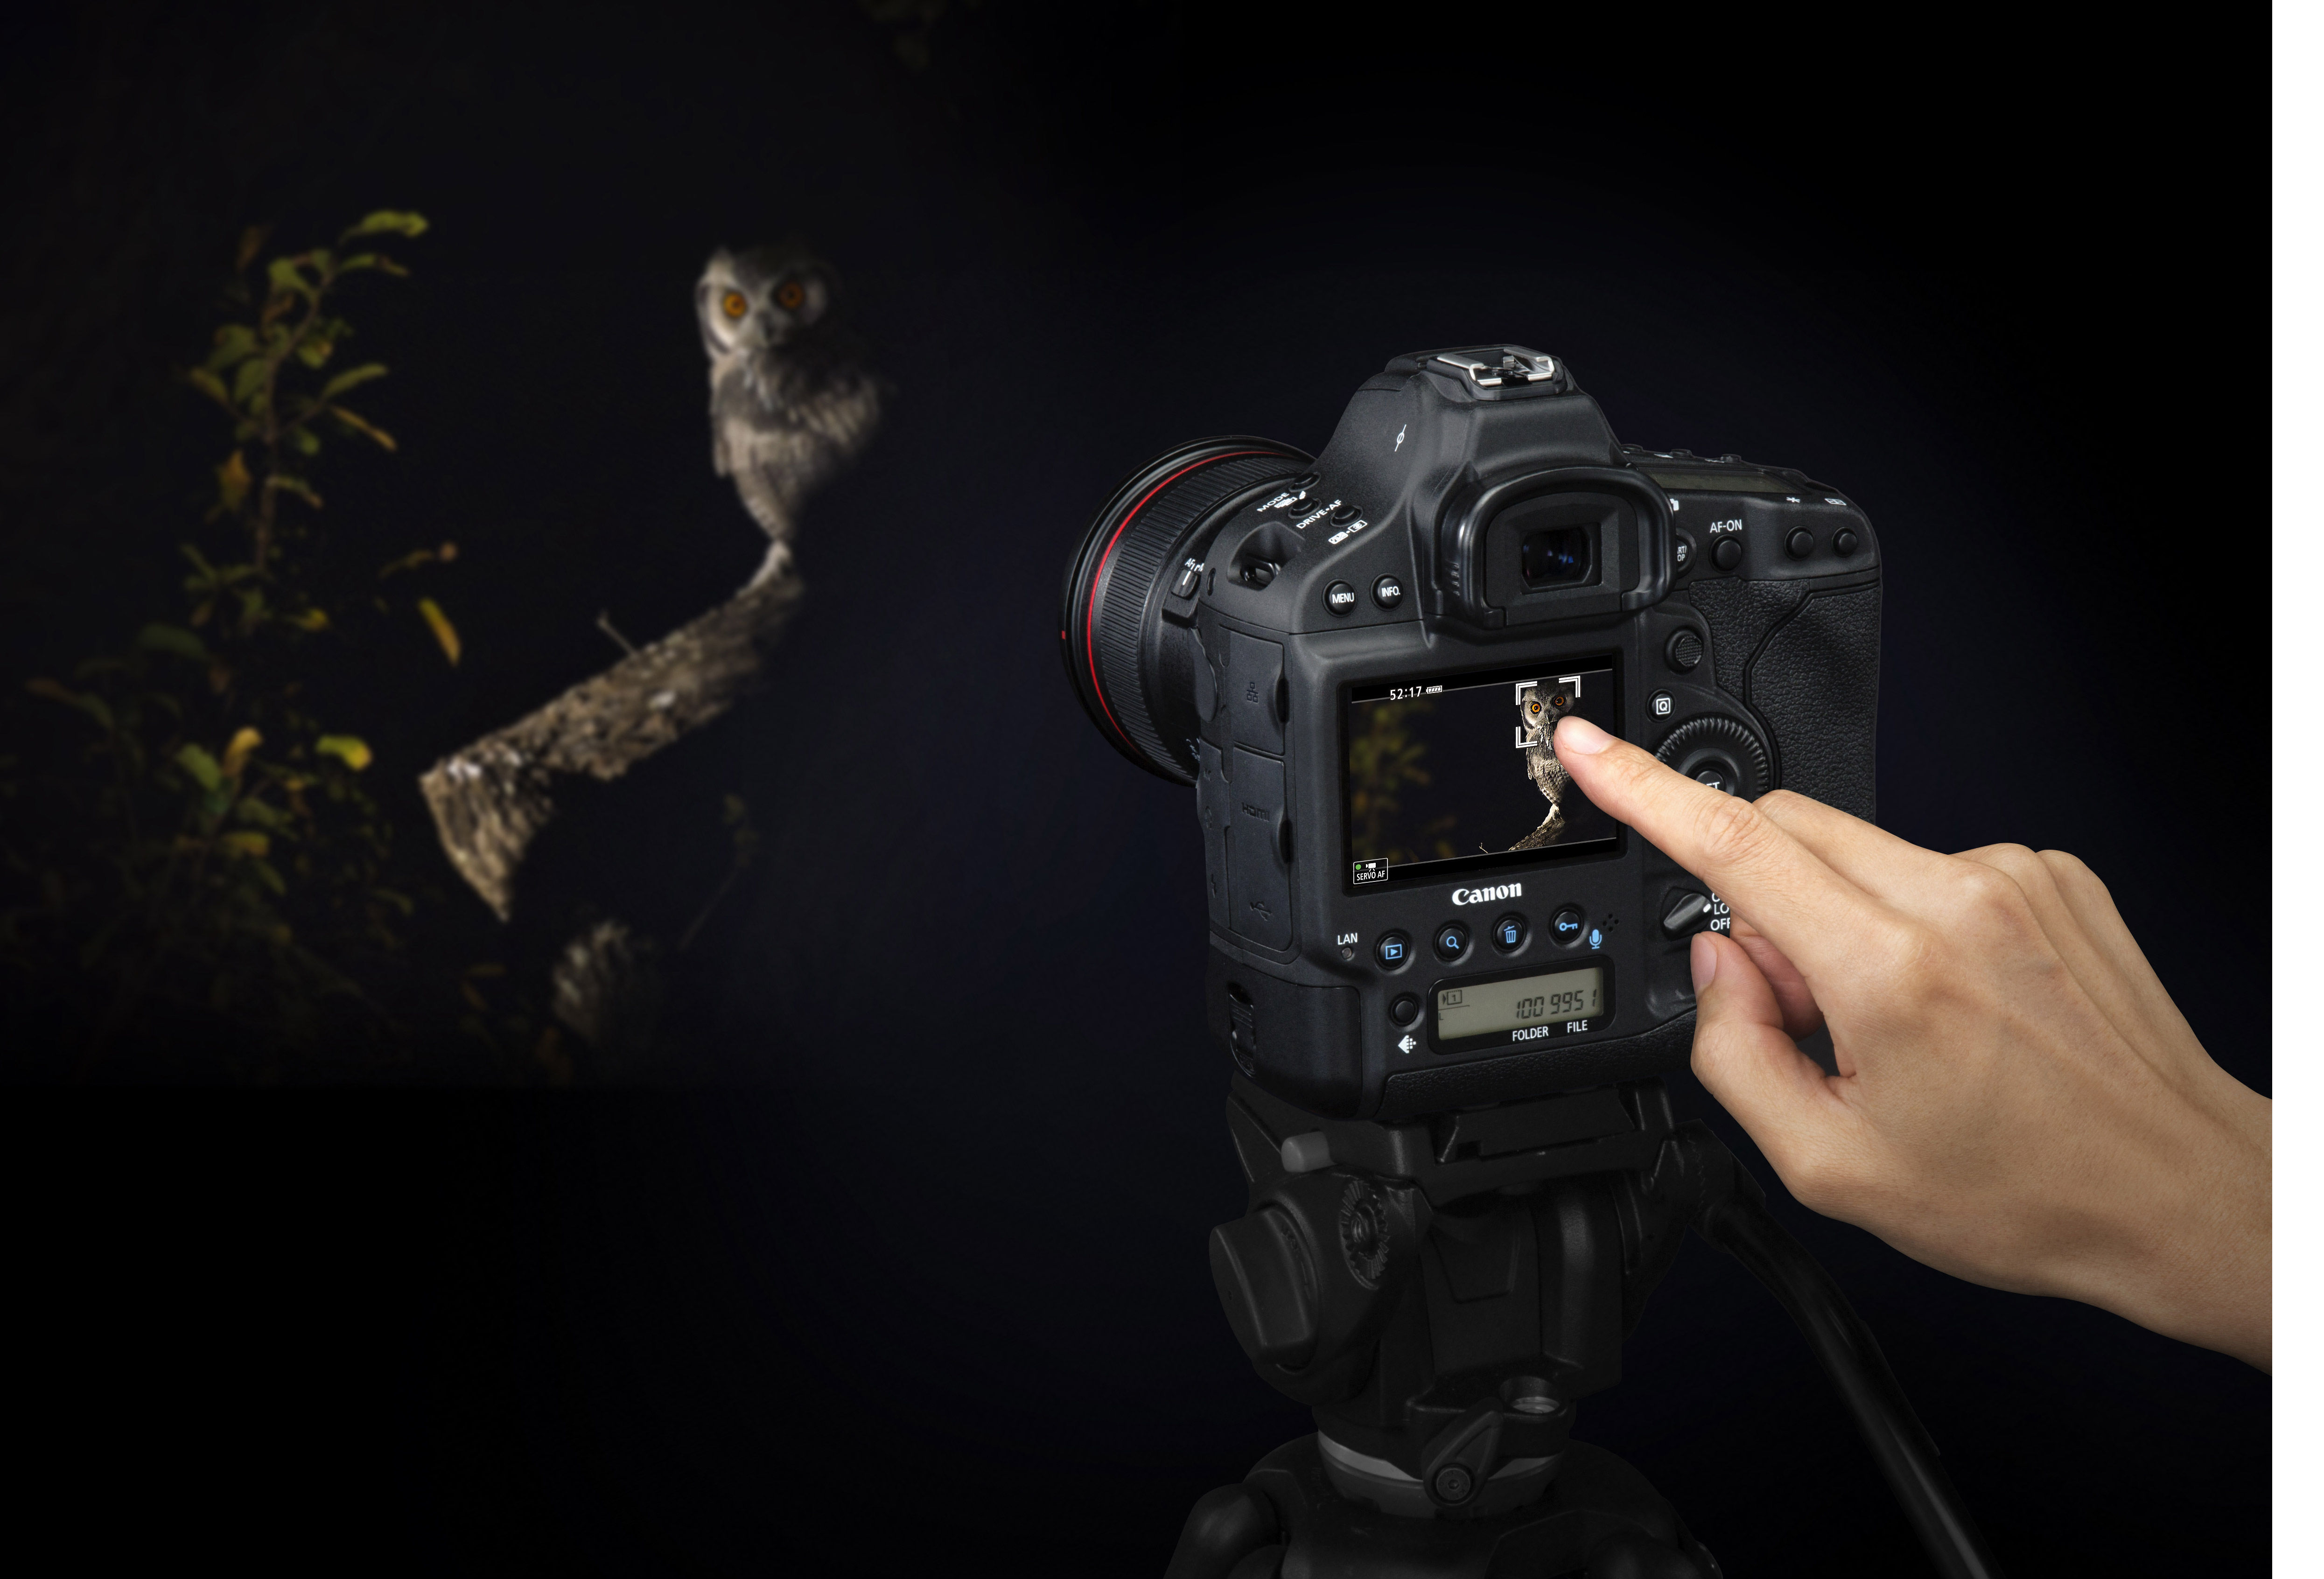 Canon EOS 1DX Mark Body Item Details